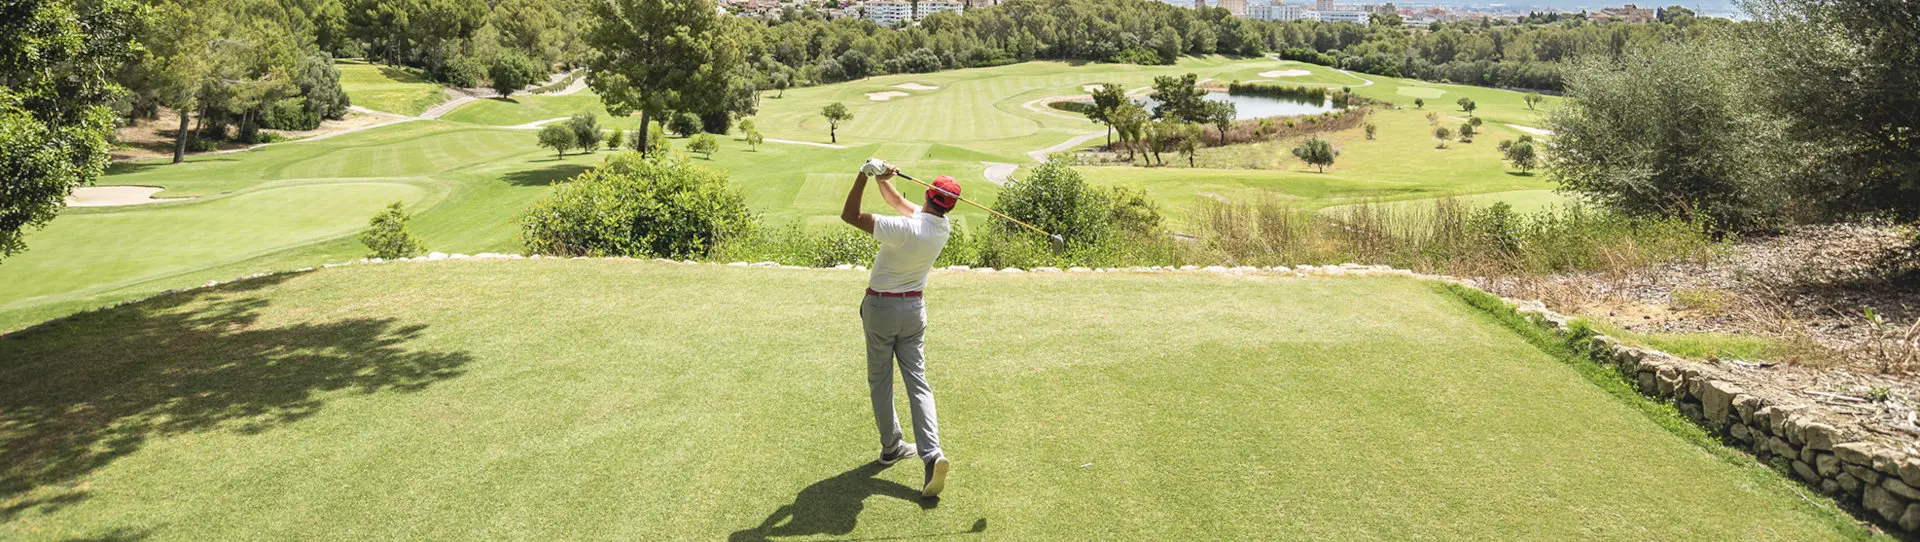 Spain golf holidays - Arabella Golf Mallorca Duo SMG+SVG - Photo 3